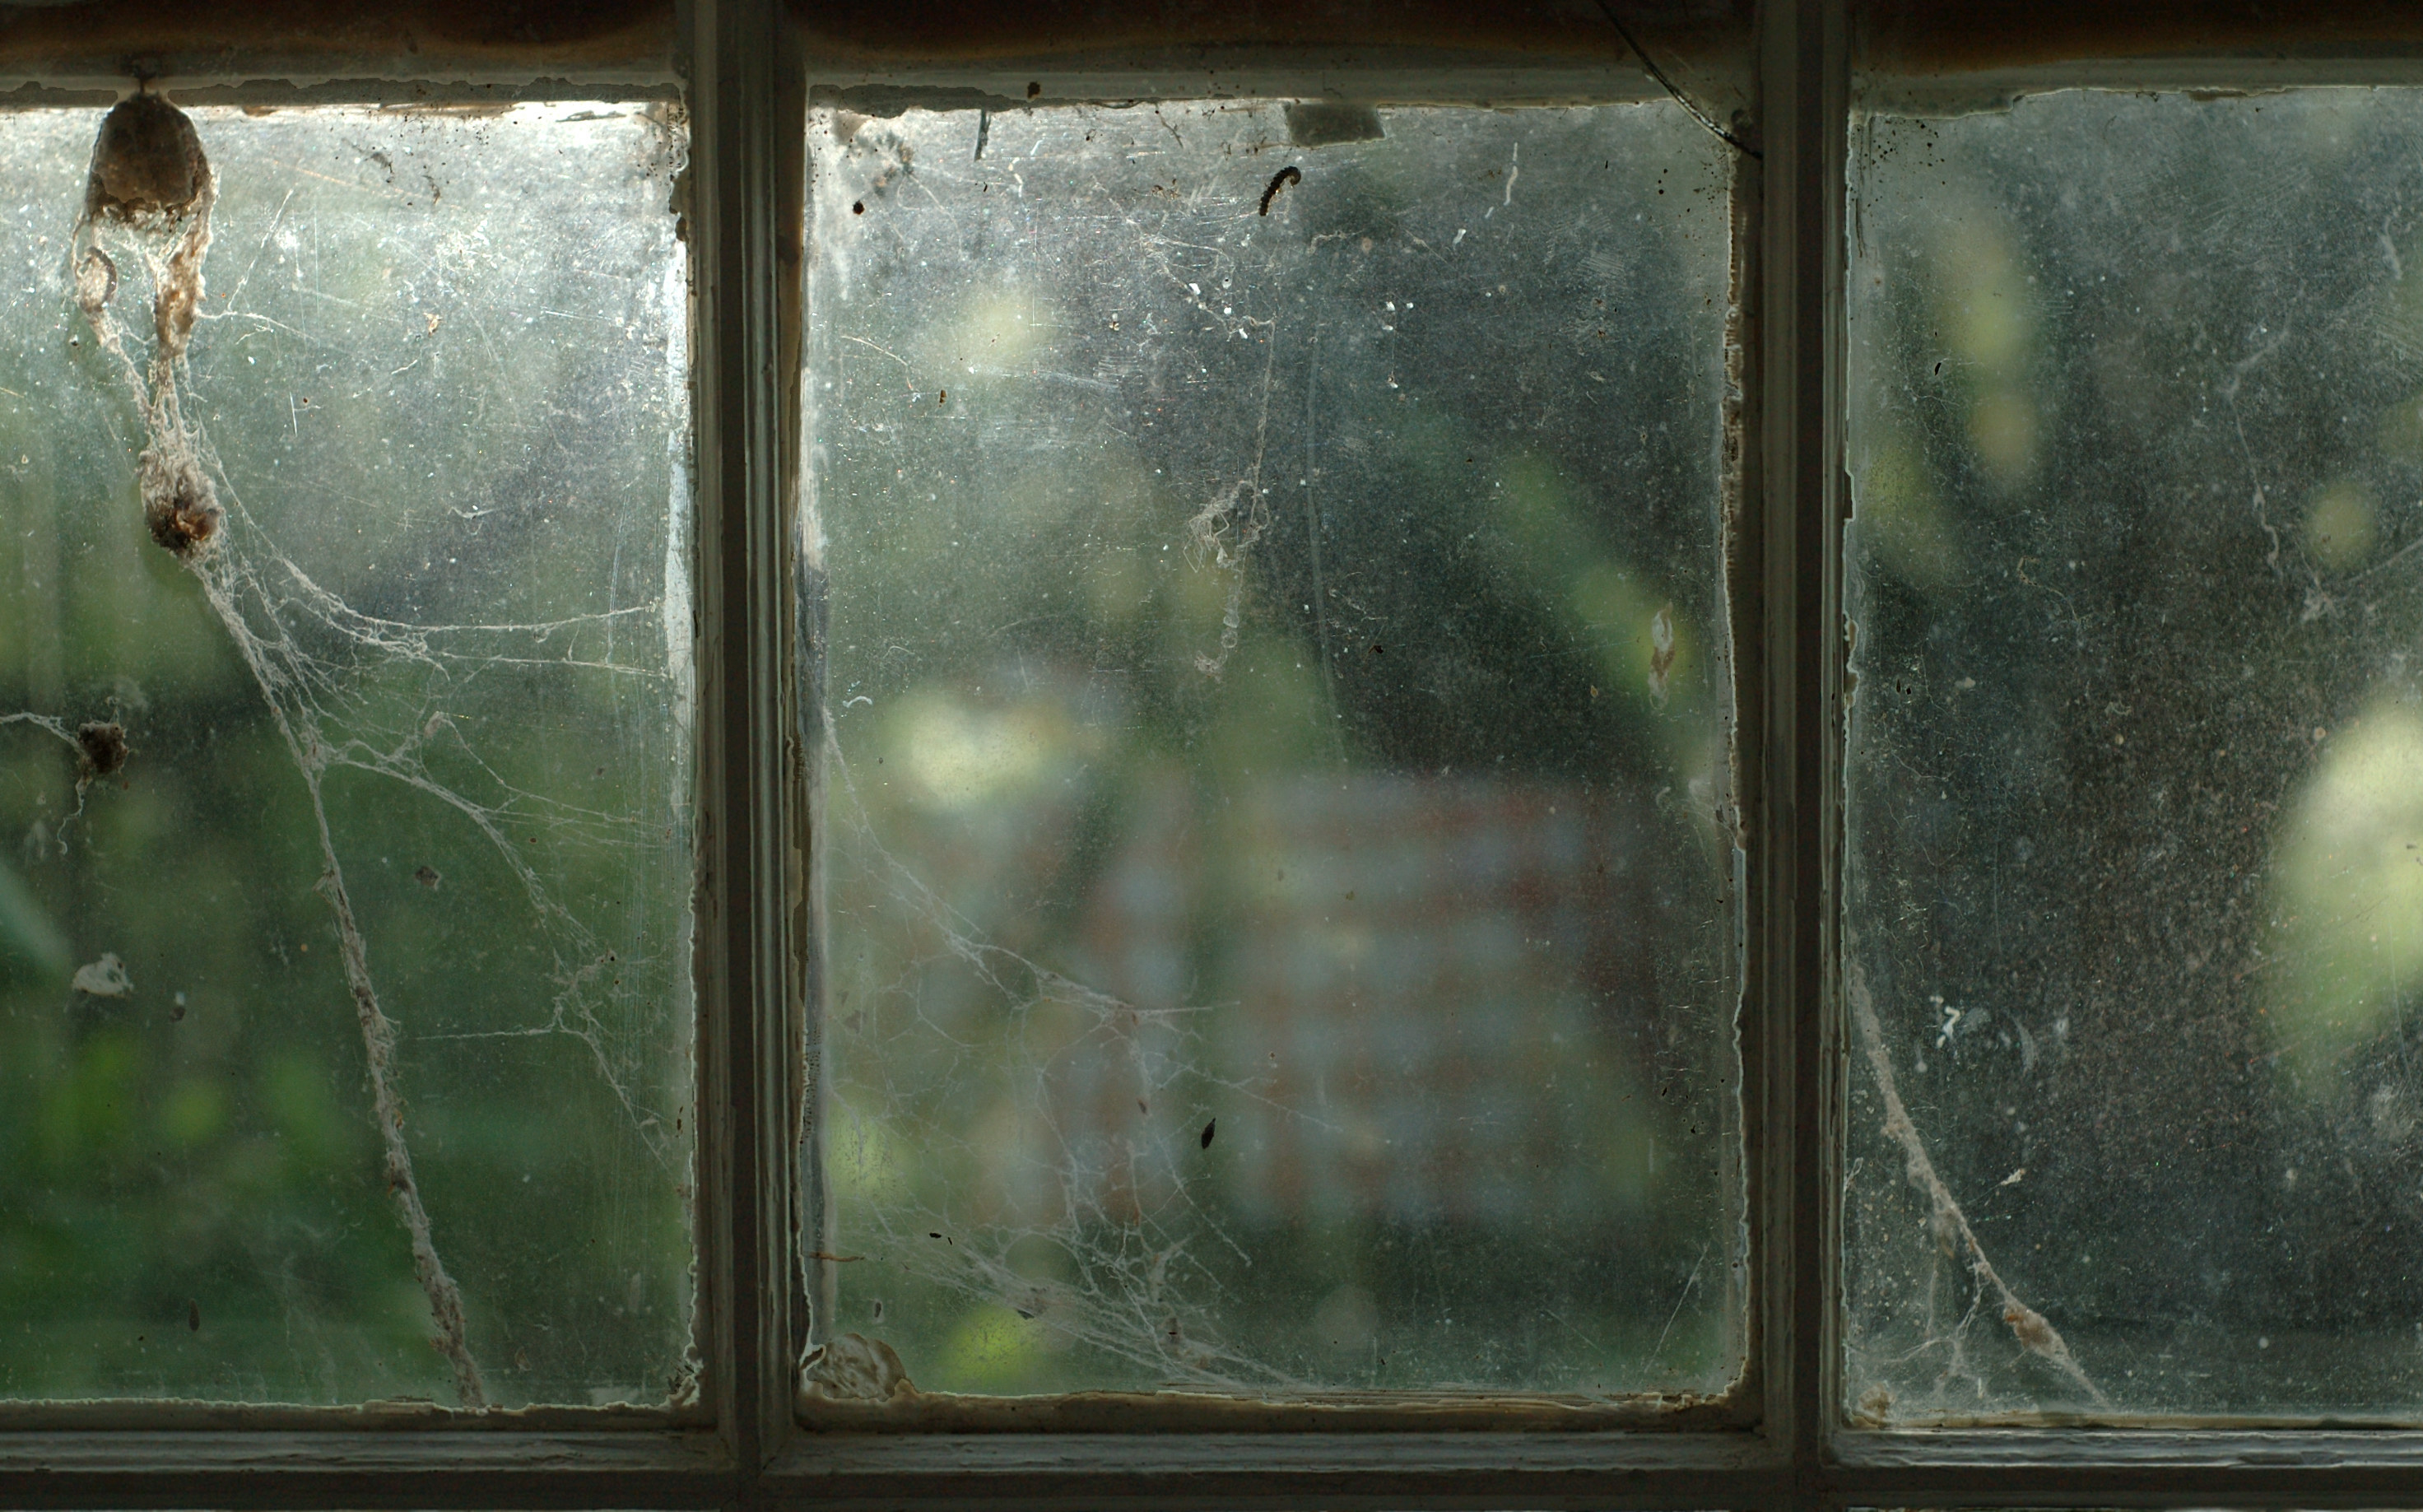 Spiderweb on window